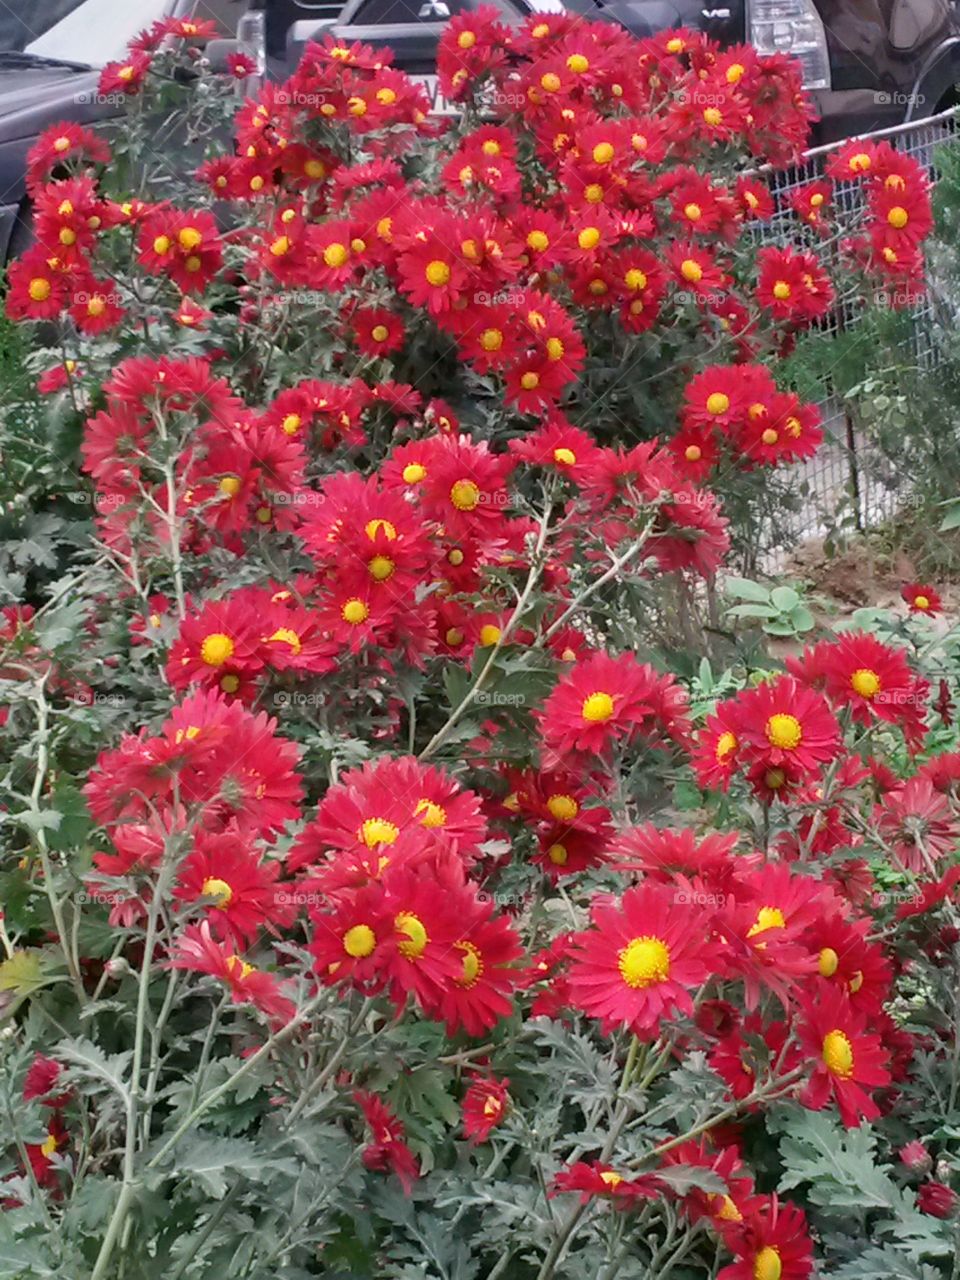 nice red flowers